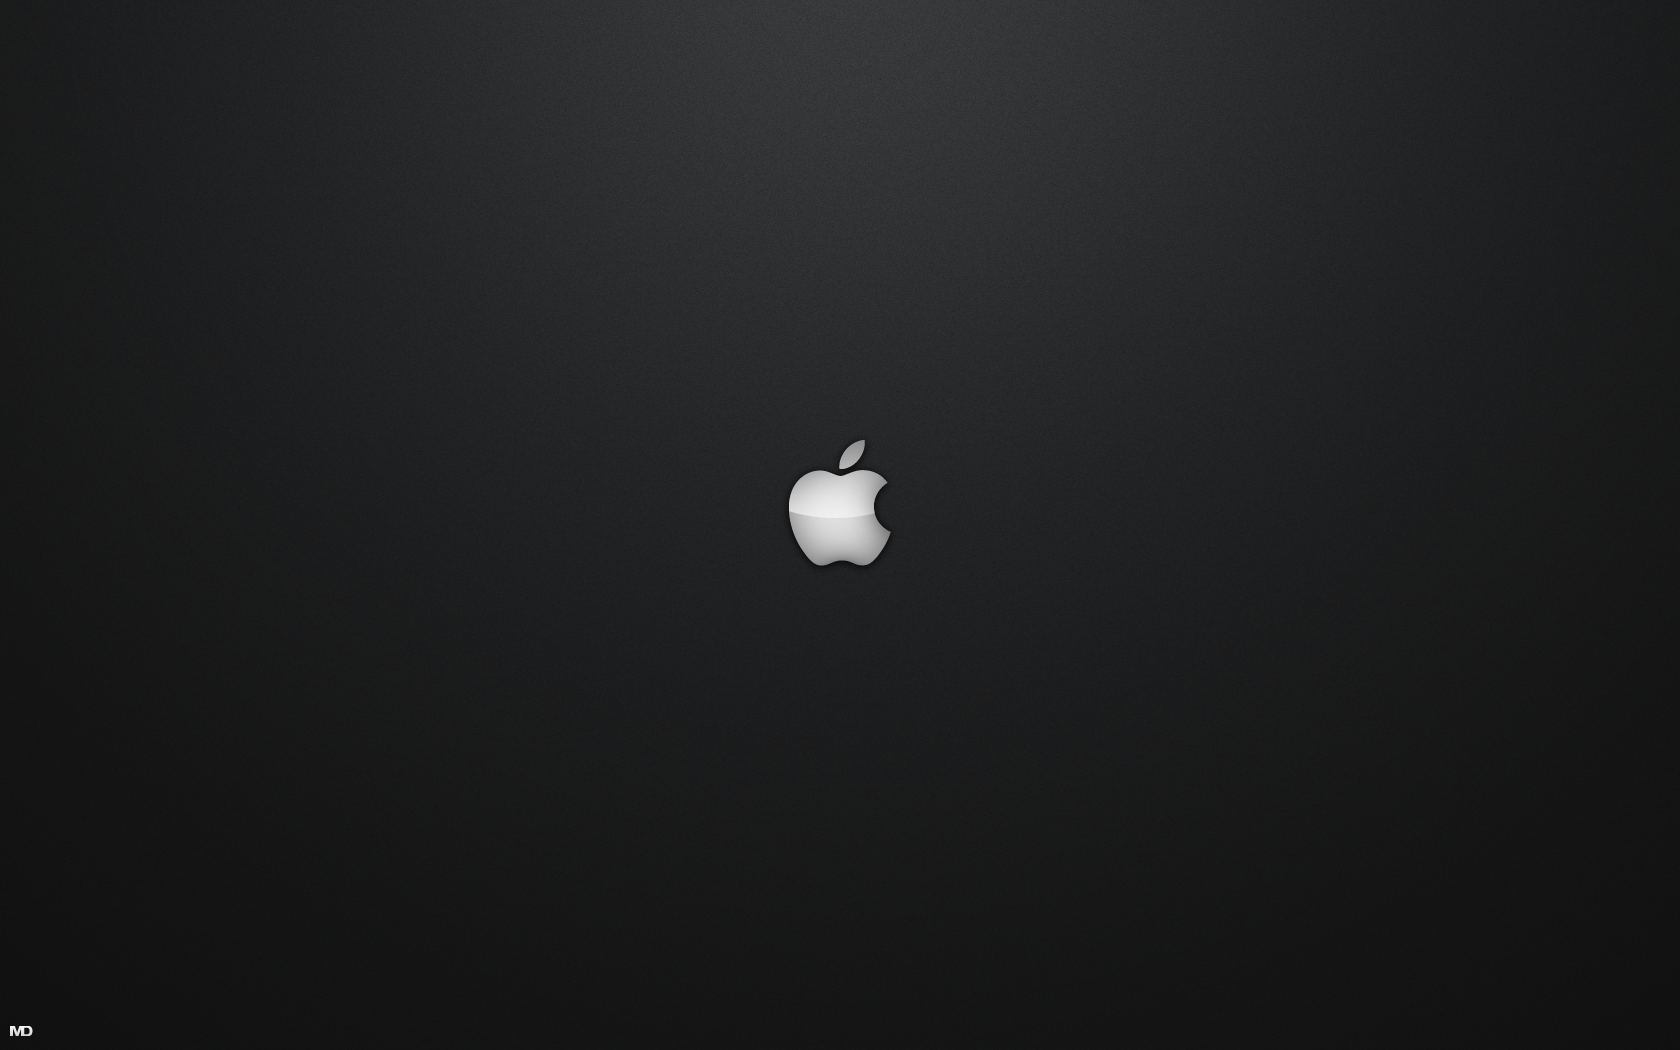 Best Image About Apple Desktop Background Buy